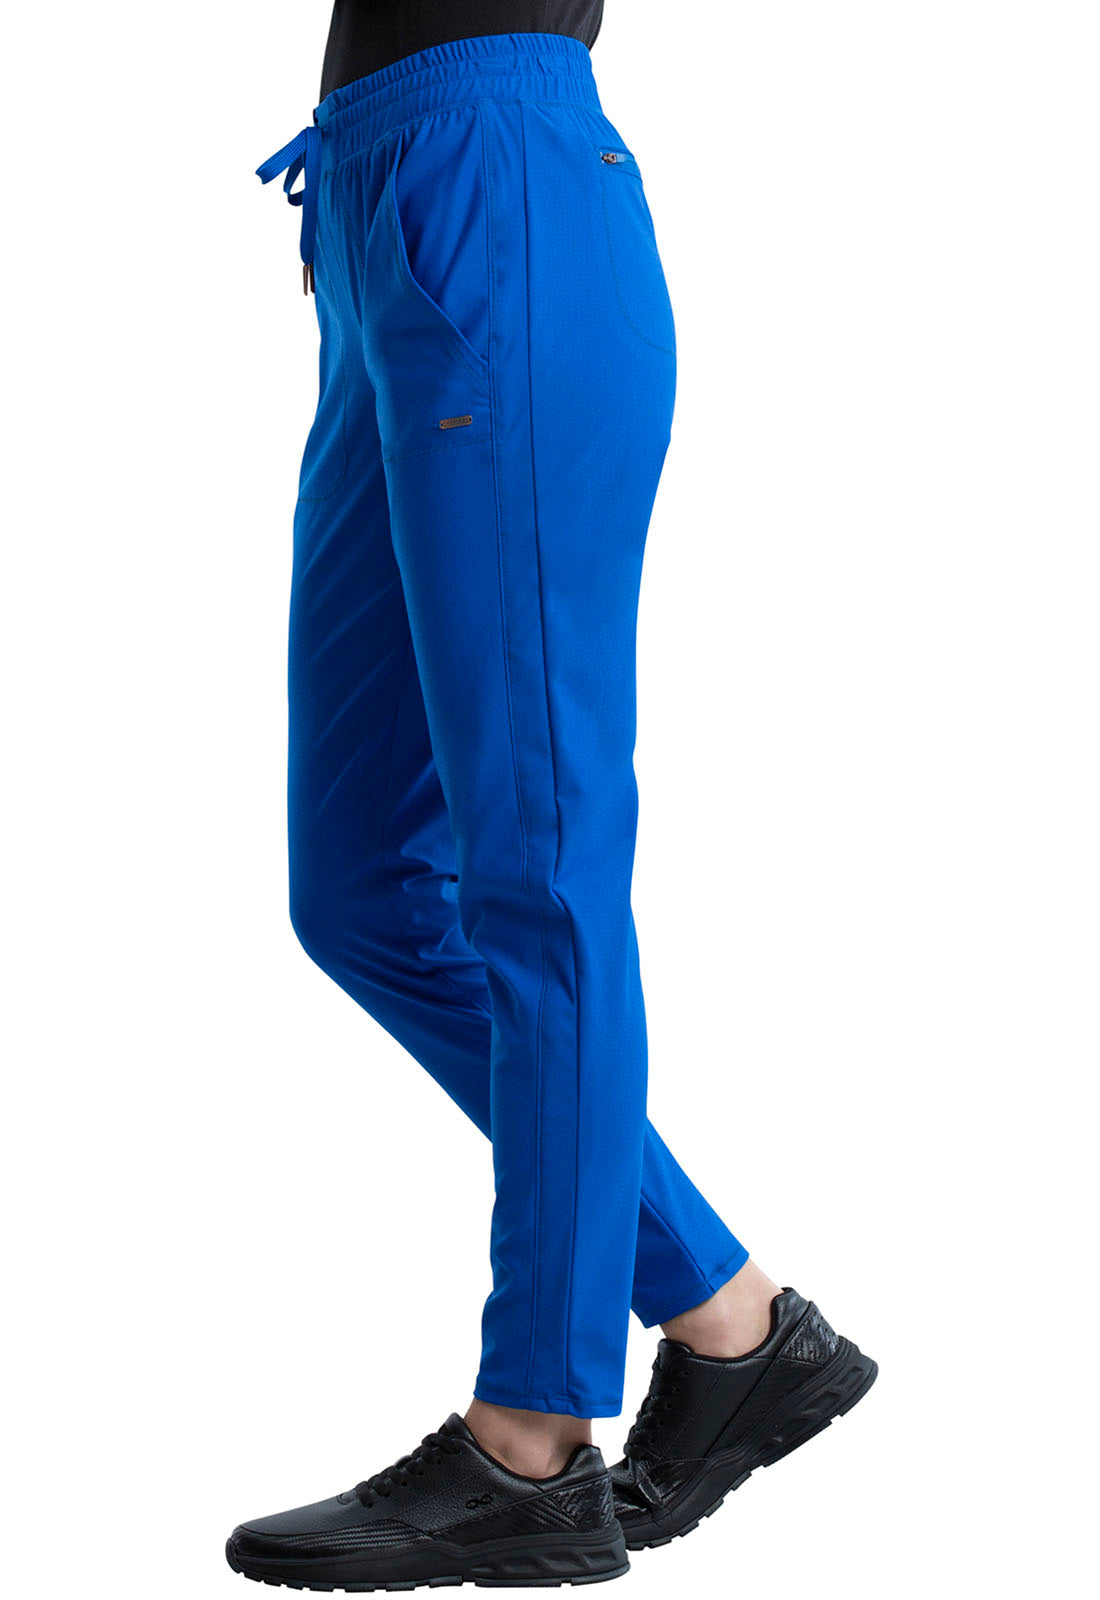 Cupid Plus Size Winter Wear Warm Fleece Track Pants/lowers For Women - Grey  (3xl/4xl/5xl) at Rs 899 | Chino Pant, Chino Jeans, चिनो ट्राउजर - Tanya  Enterprises, Ludhiana | ID: 25476257555